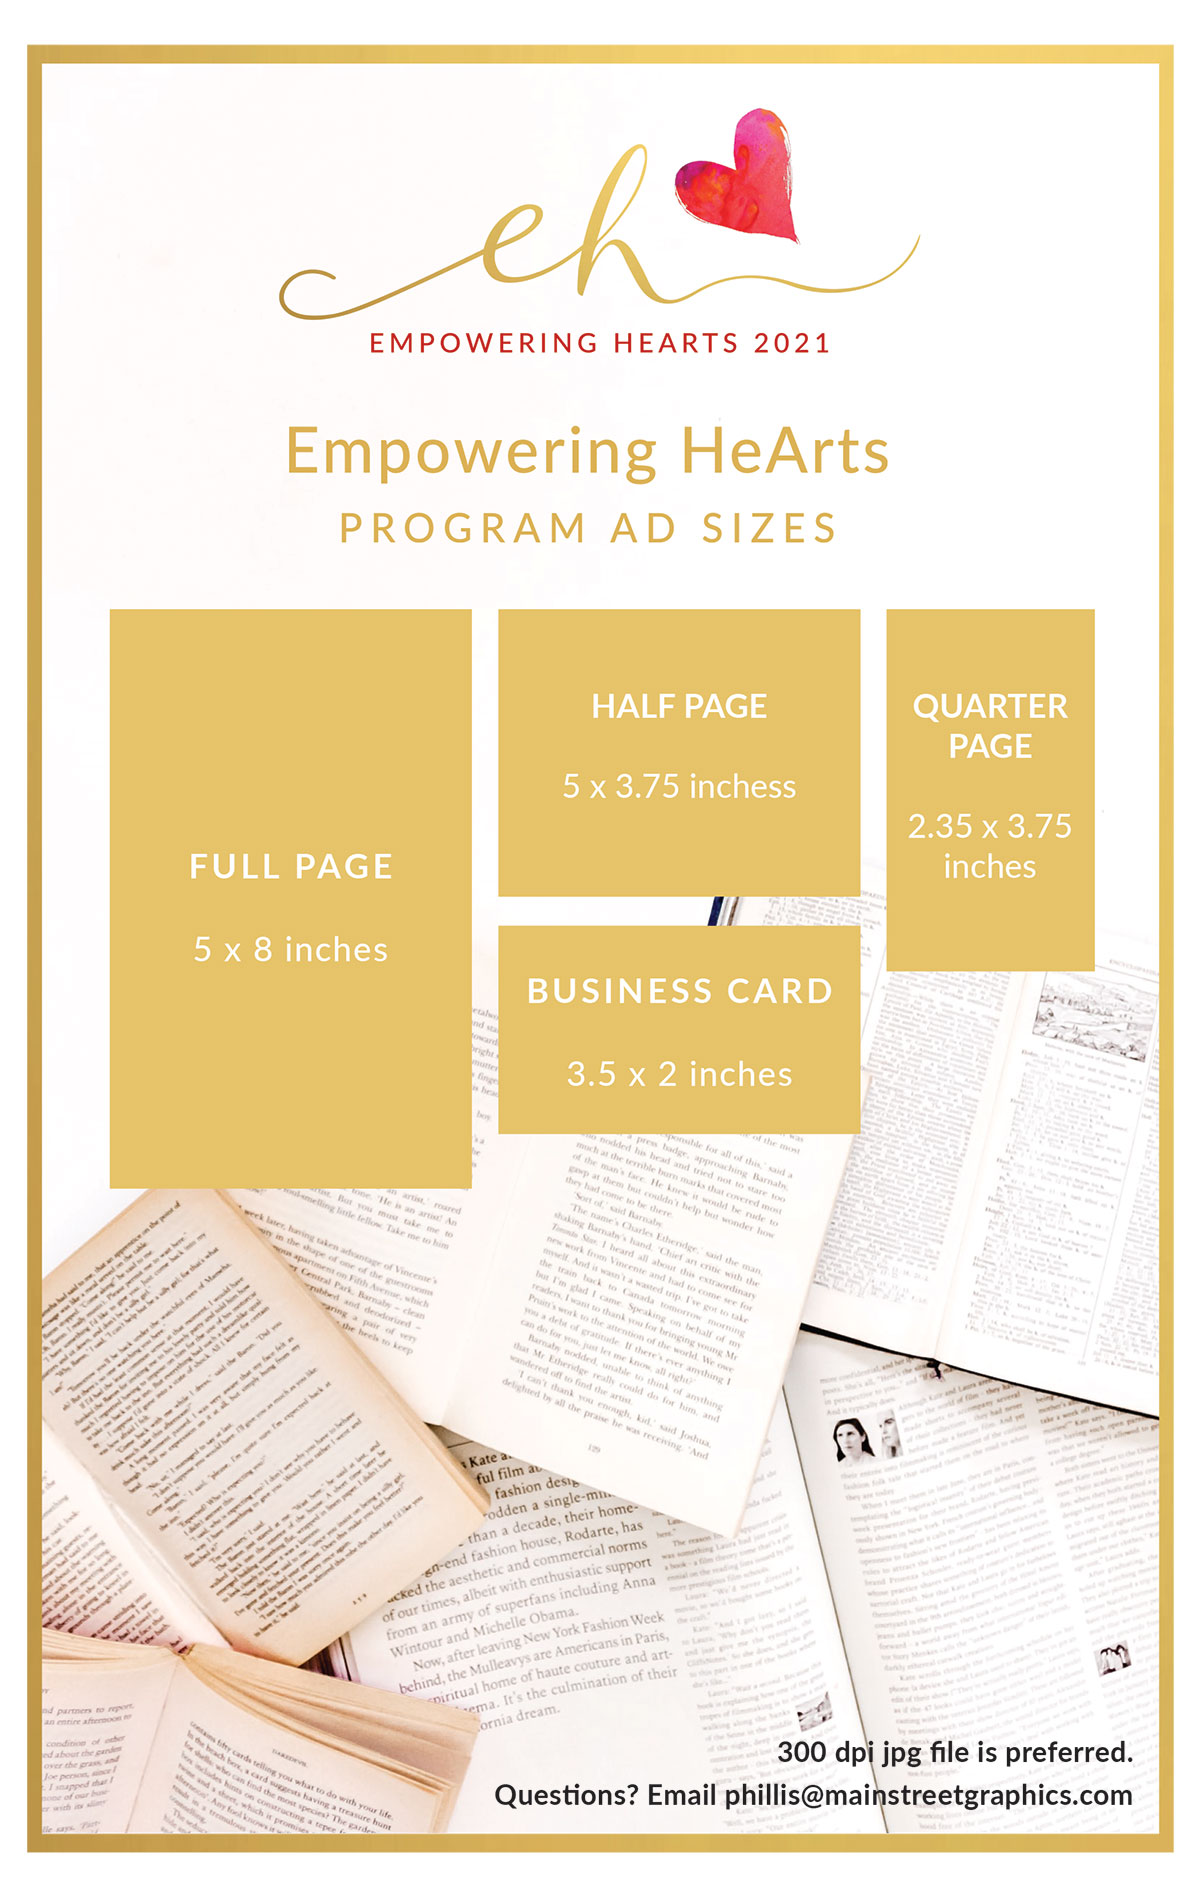 Empowering HeArts 2021 Program Ad Specs